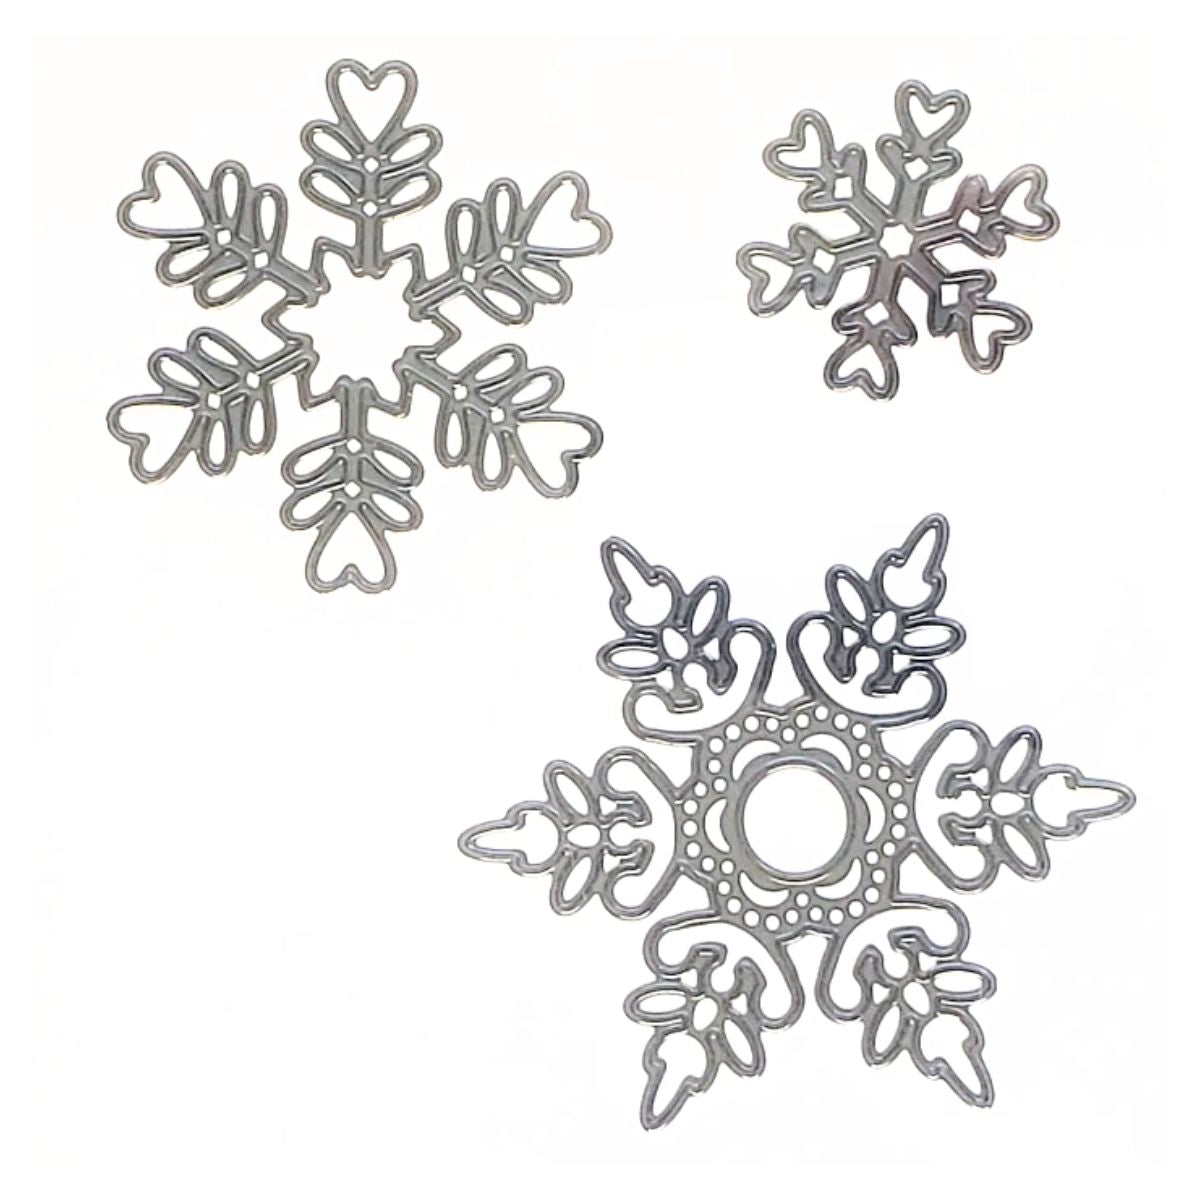 Suaje de Corte de Copo de Nieve / Assorted Snowflakes